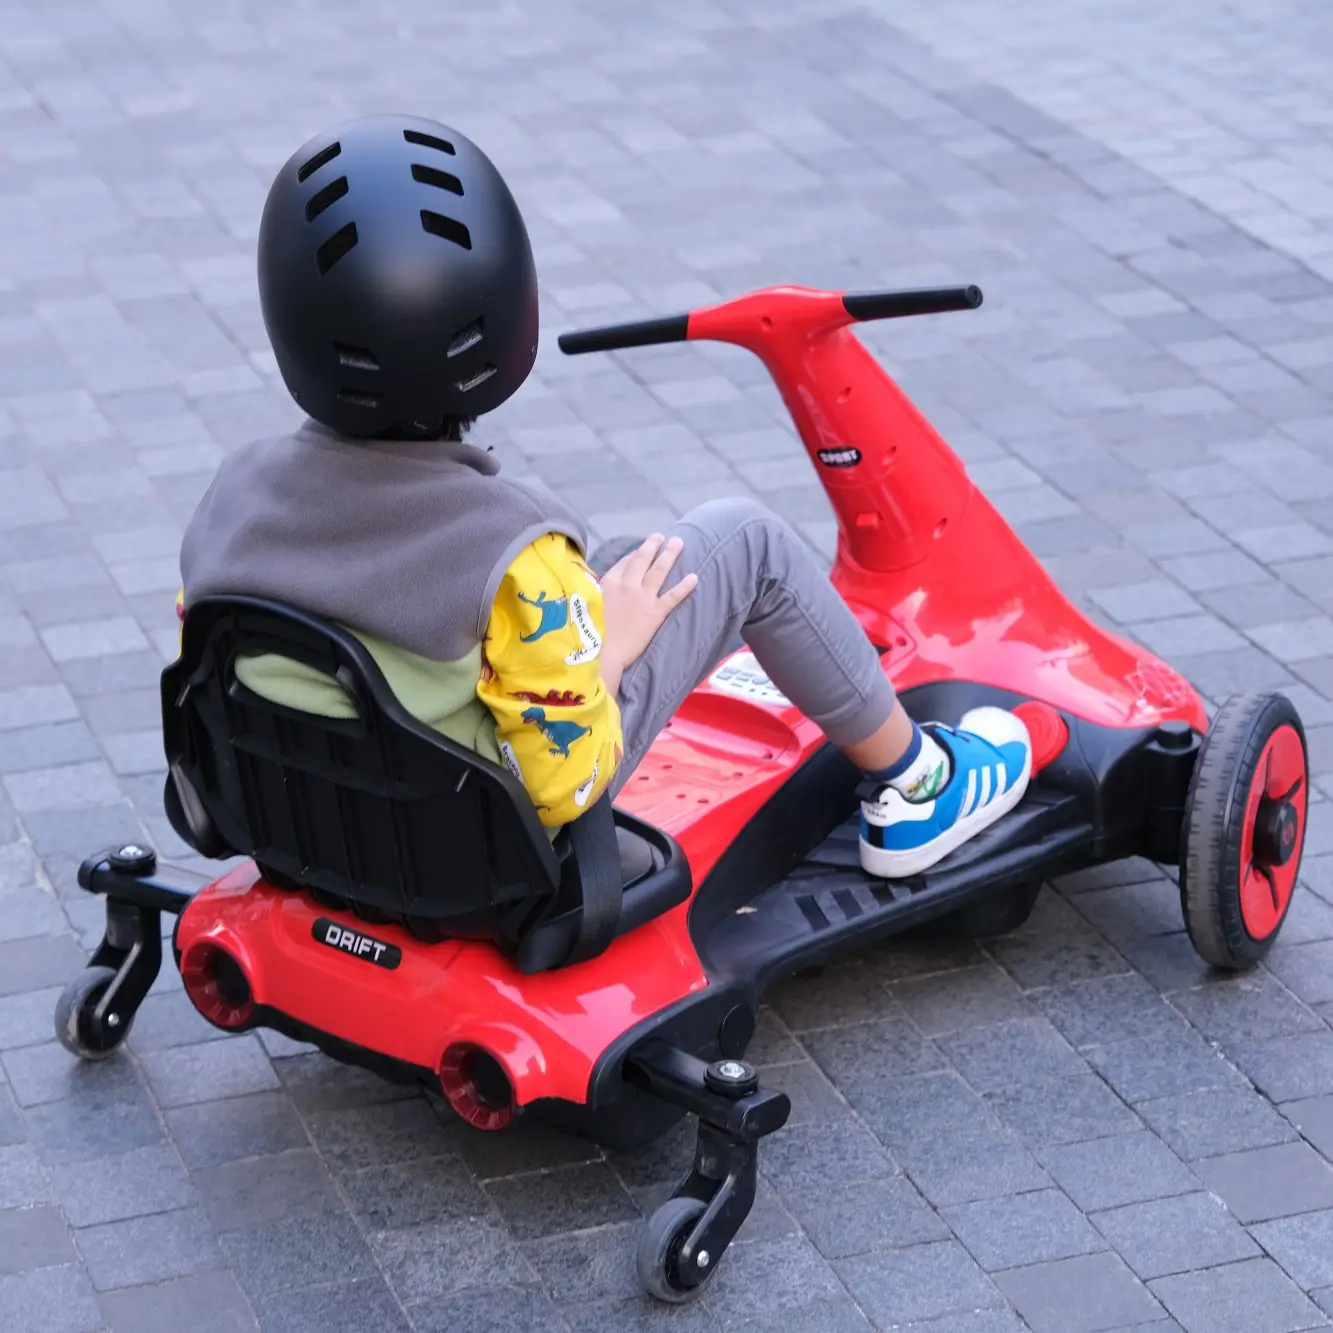 CE חשמלי נסחף קרטינג go-kart 2IN1 גבוהה באיכות 12V 7AH ארבעה גלגל מיני חשמלי נסחף קטנוע ללכת kart ילדים ילד